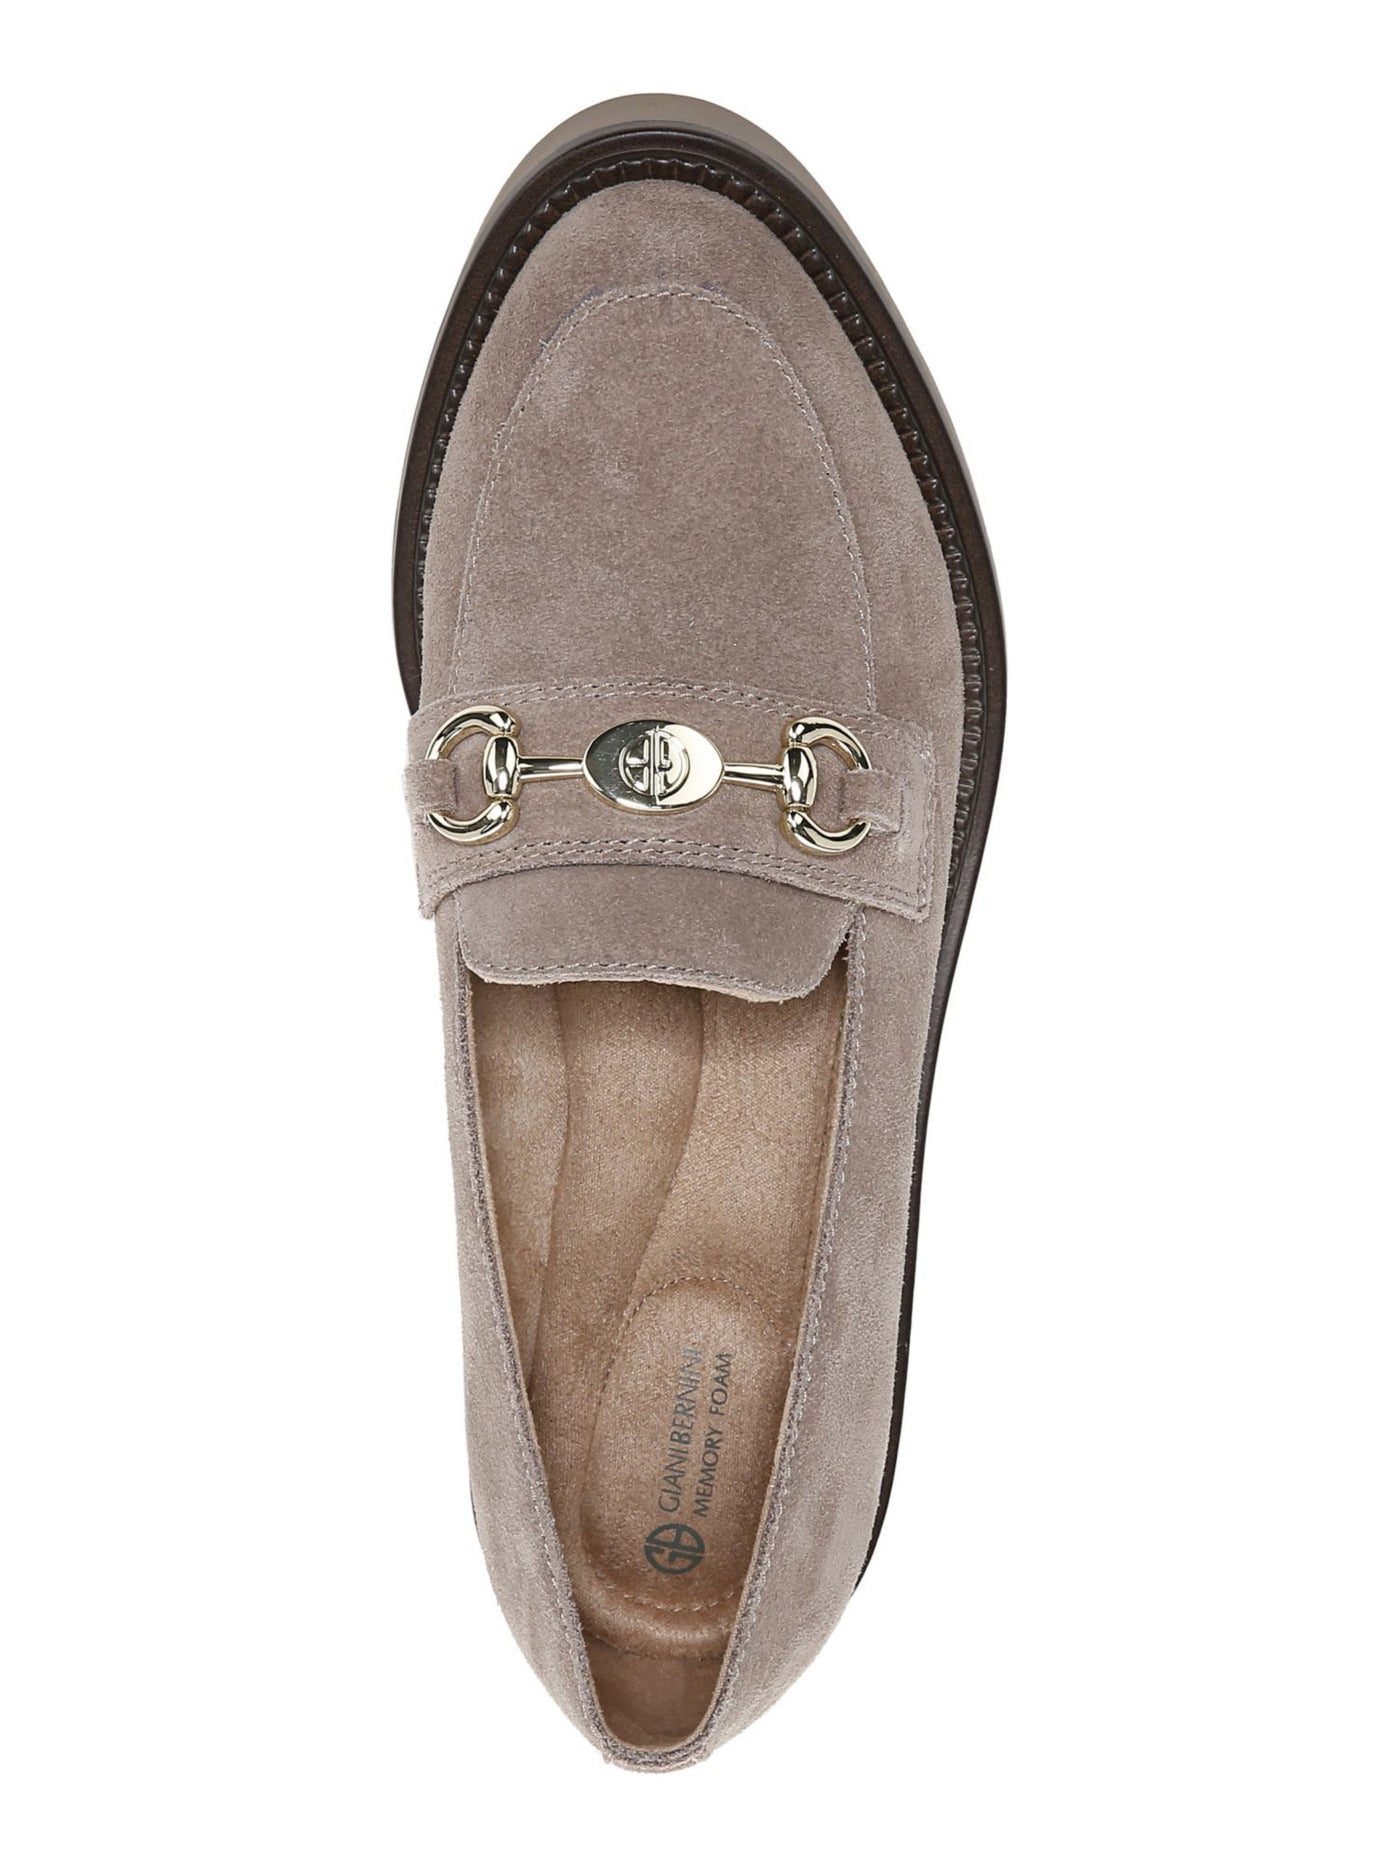 GIANI BERNINI Womens Beige 1-1/2" Platform Comfort Mayaa Round Toe Wedge Slip On Leather Loafers Shoes 10 M